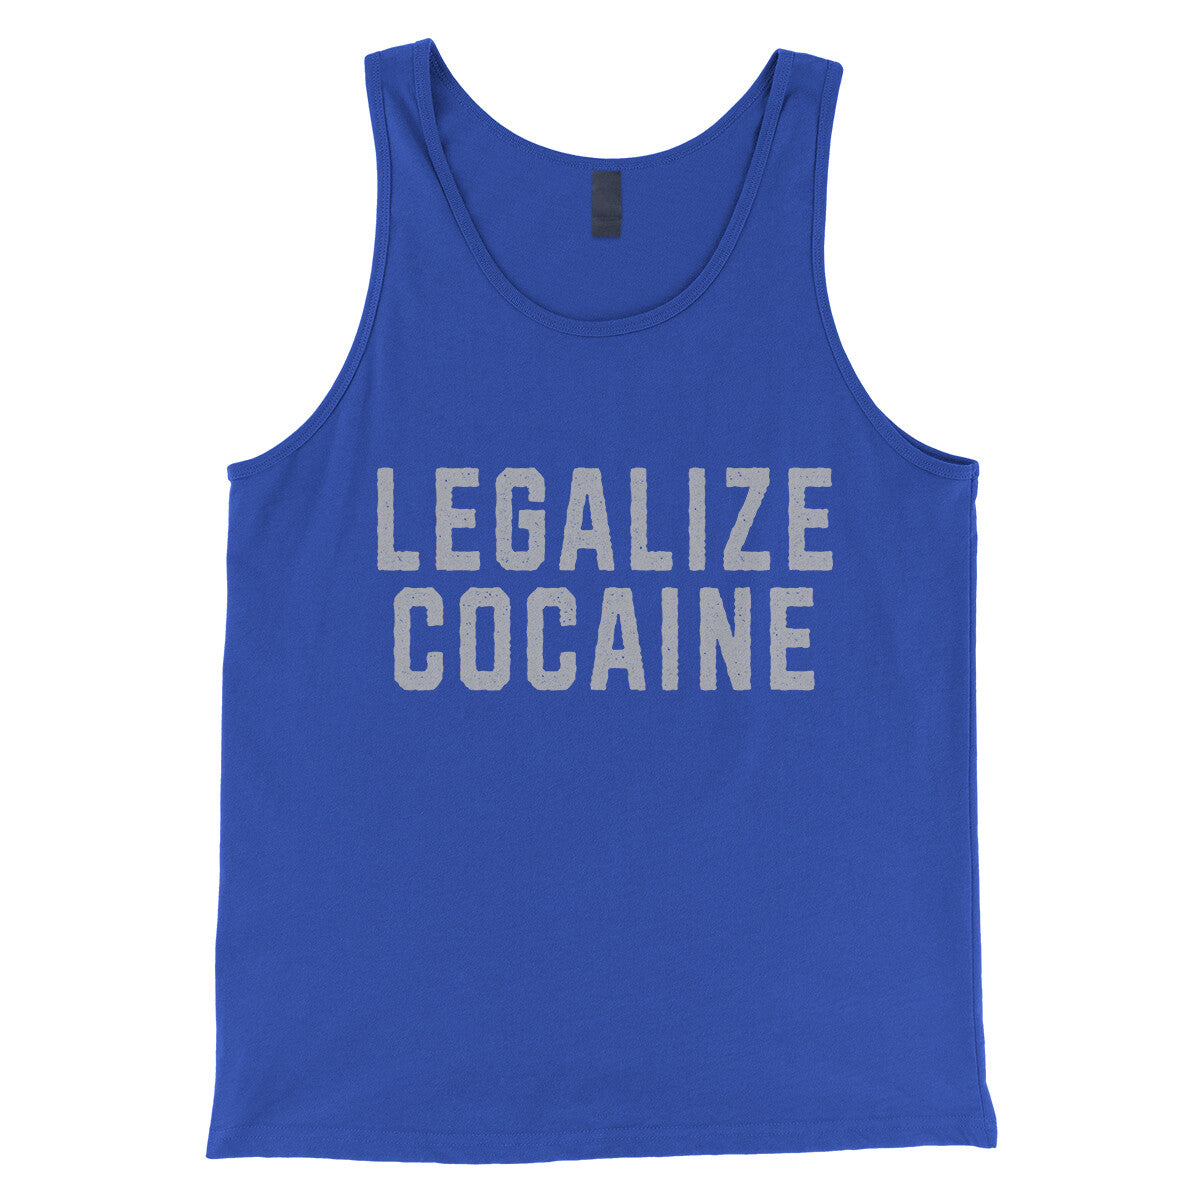 Legalize Cocaine in True Royal Color